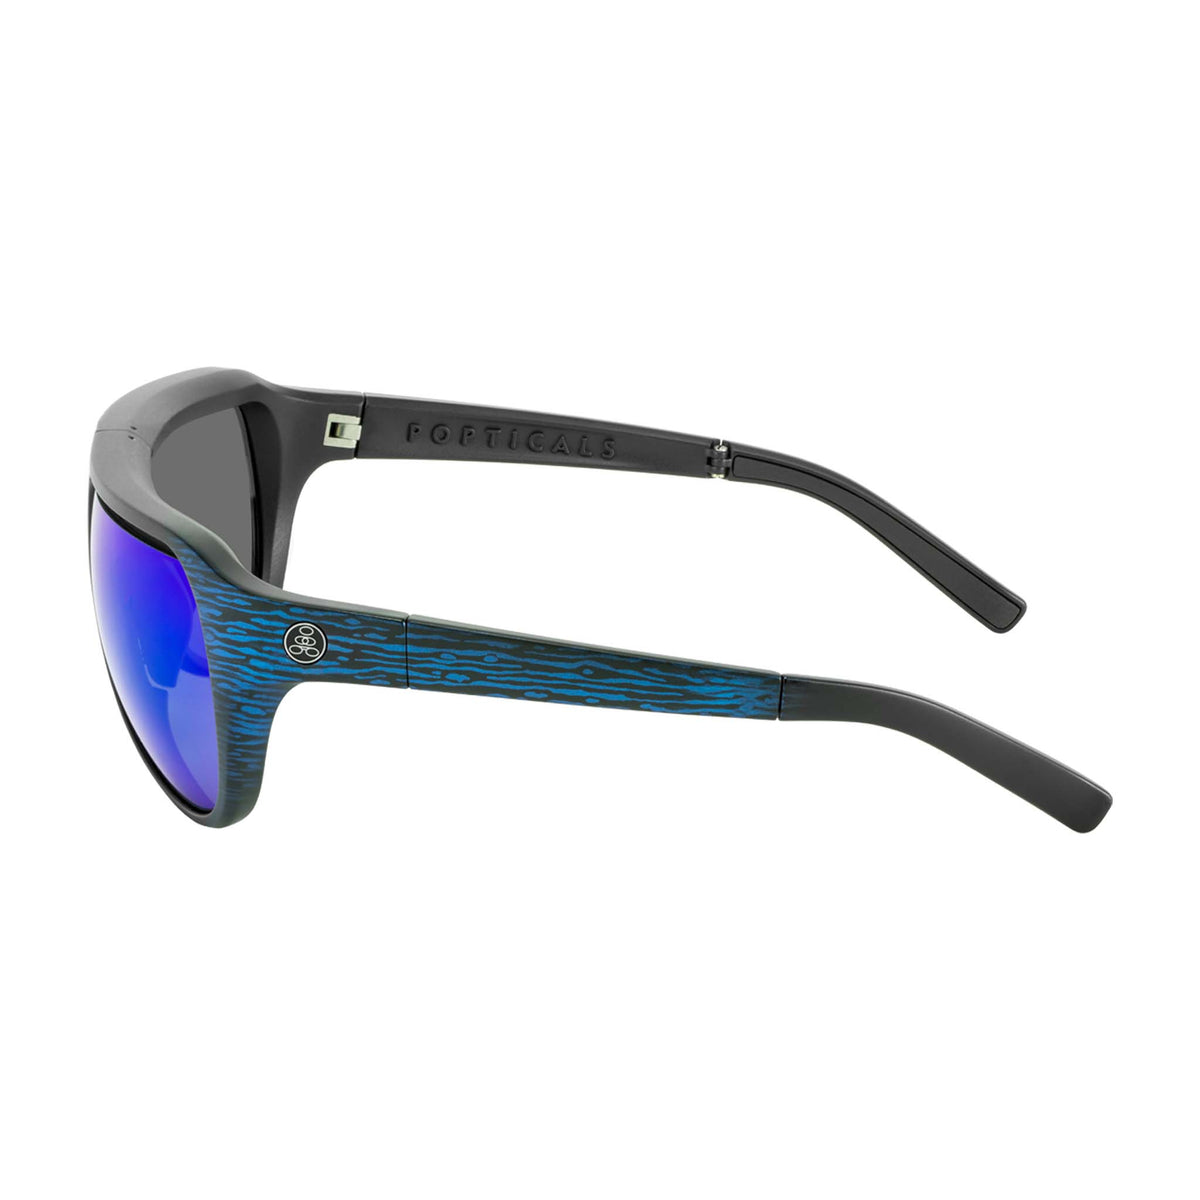 Popticals, Premium Compact Sunglasses, PopAir, 300010-EUUN, Polarized Sunglasses, Matte Blue/Black Wood Grain Frame, Blue Mirror Lenses, Side View